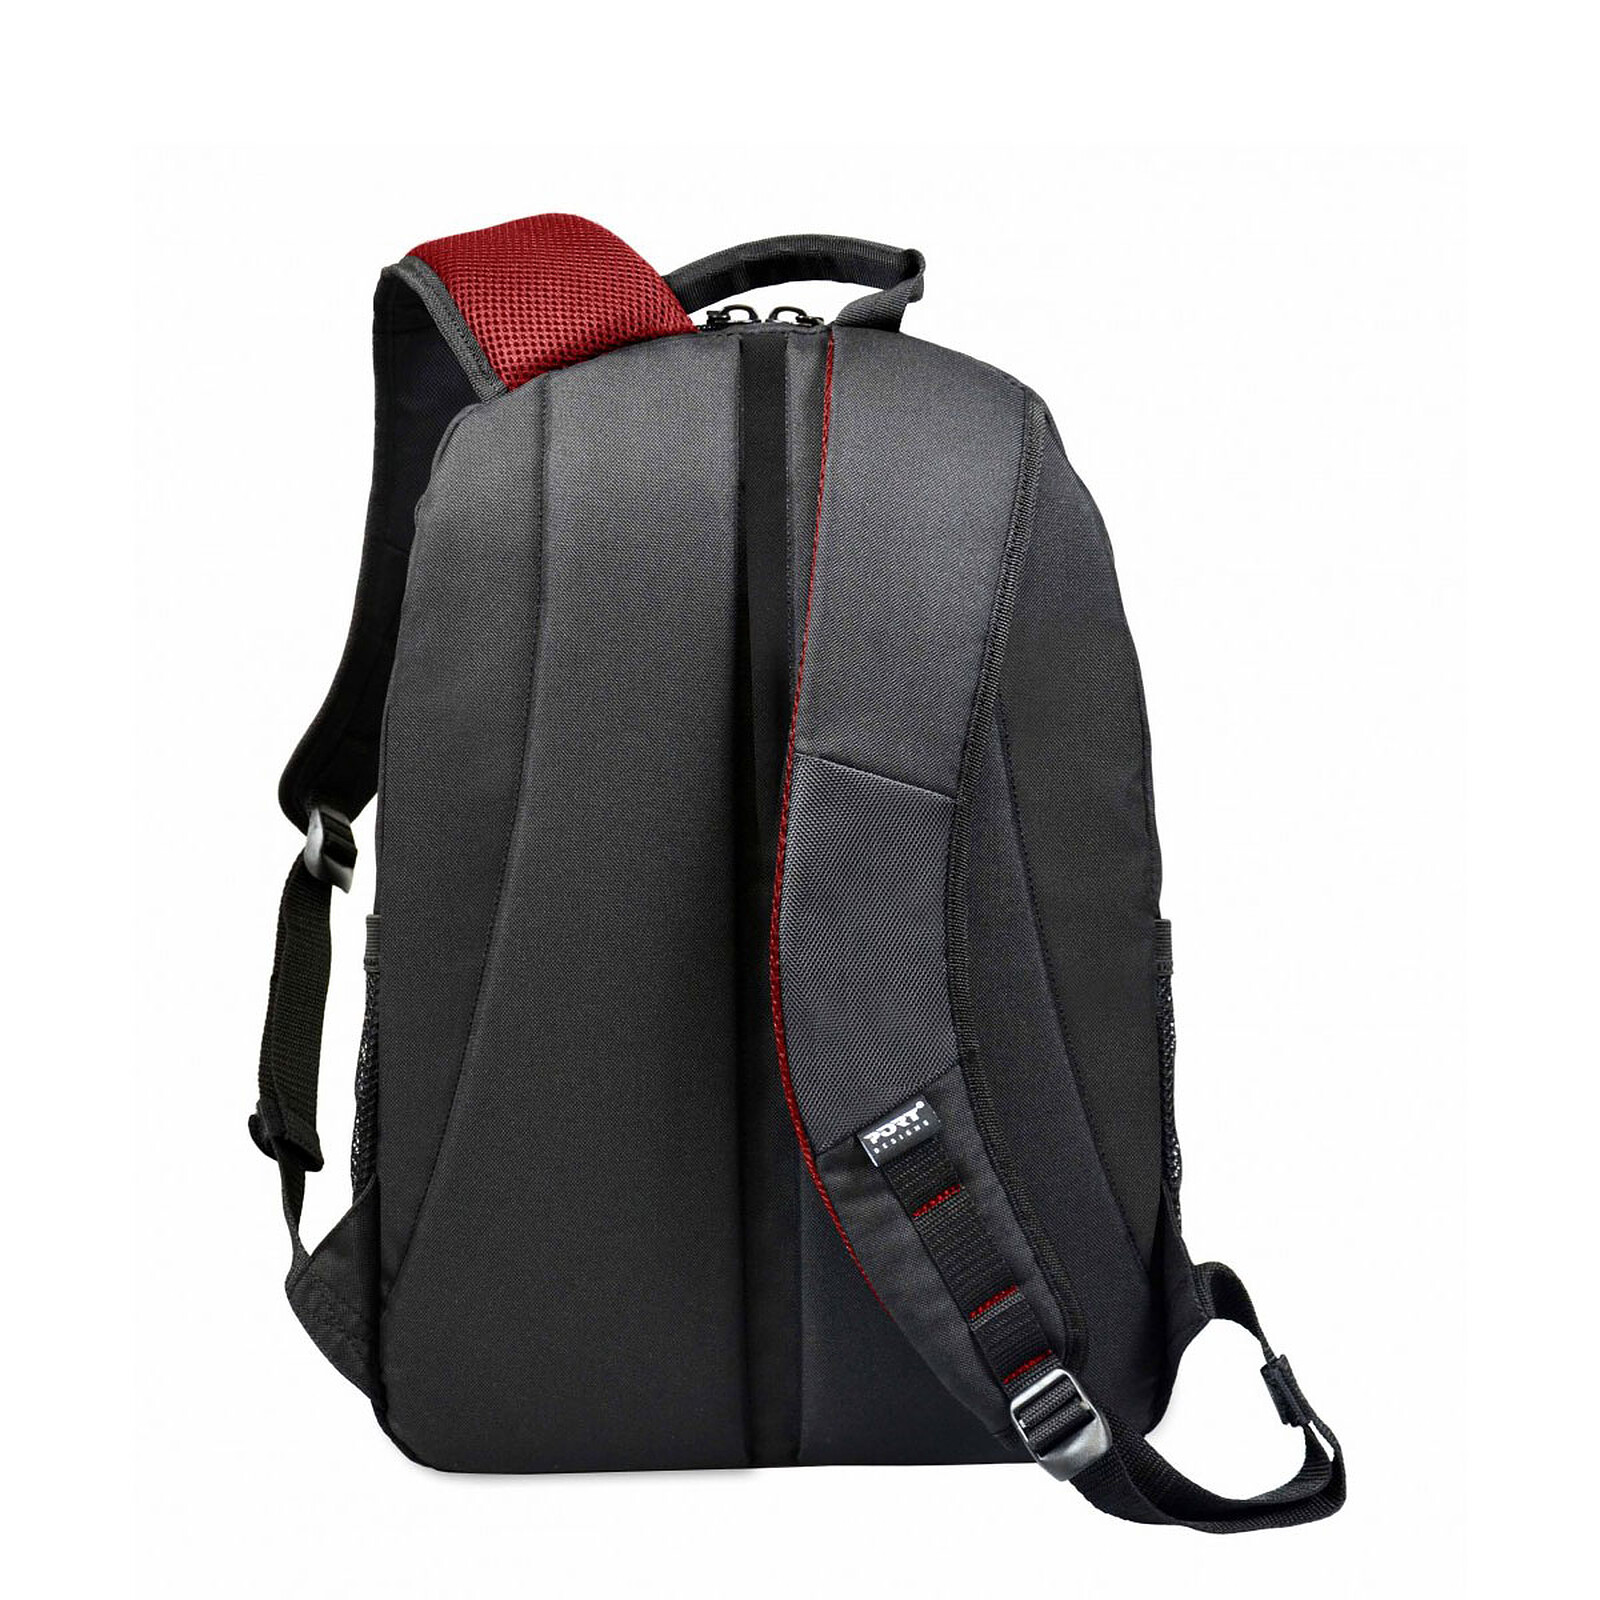 PORT Designs Houston Backpack 15.6